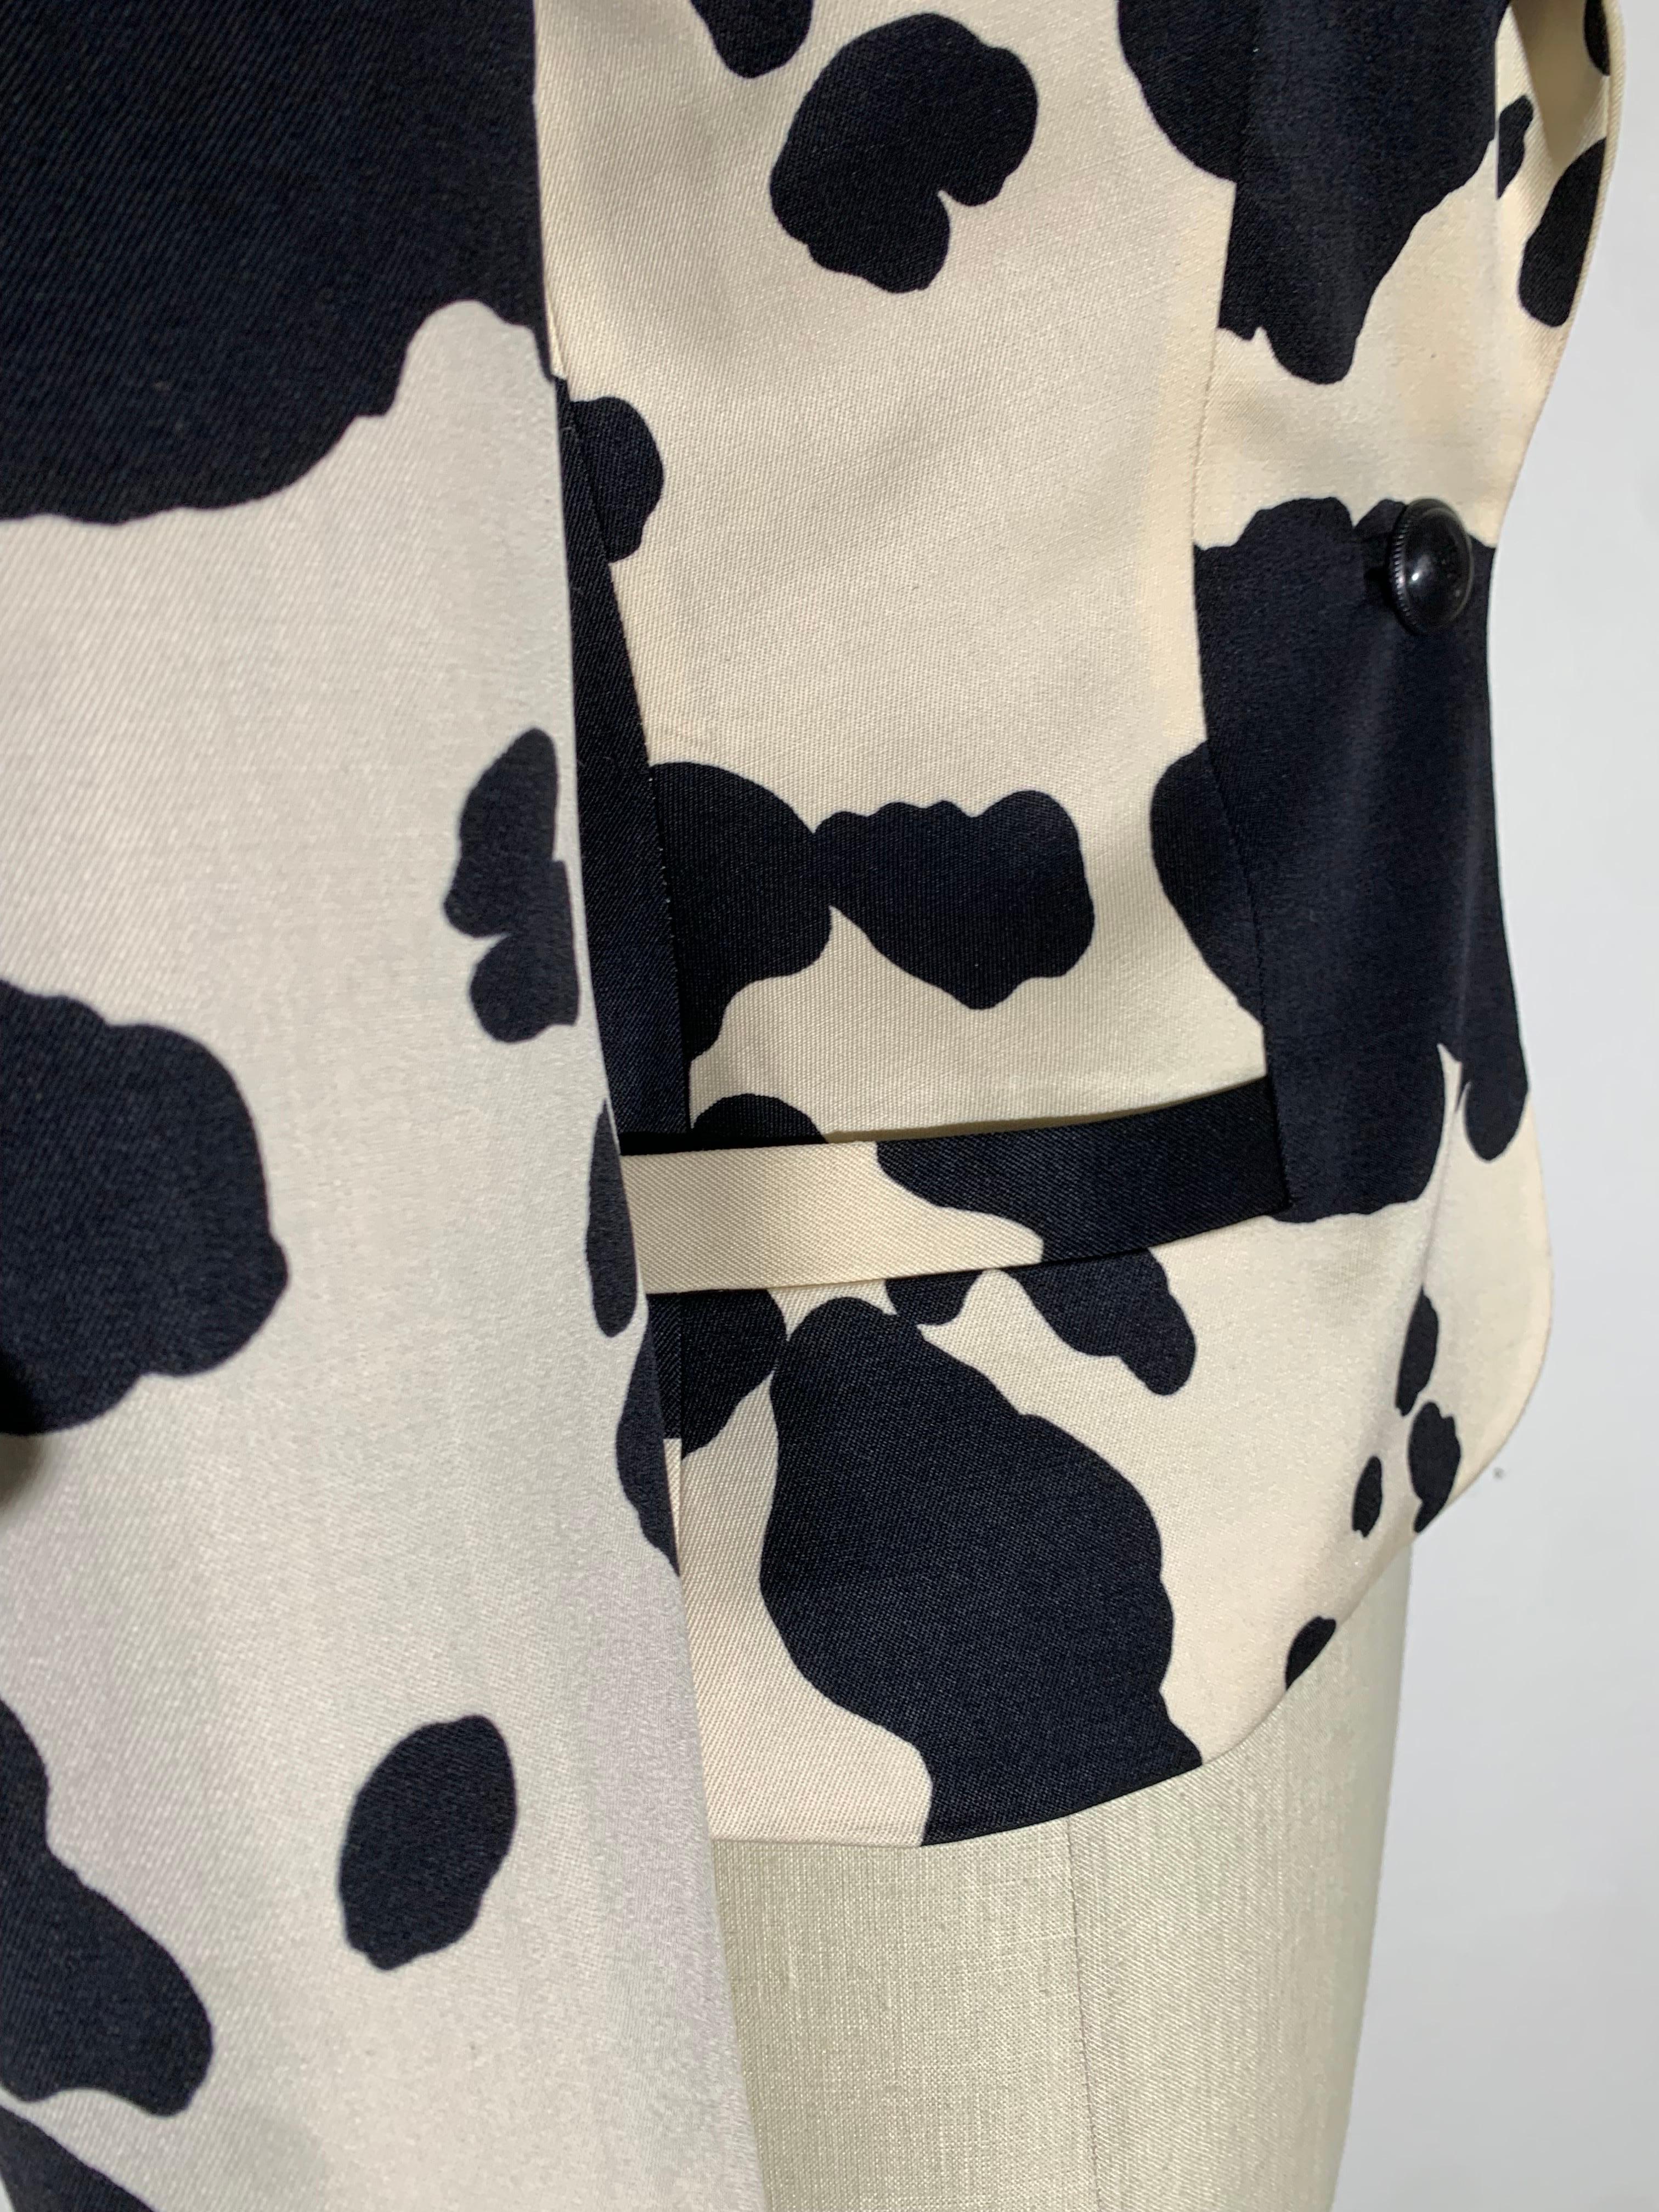 Gianni Versace Black/White Cow Print Wool Gabardine Jacket w Single Button For Sale 3